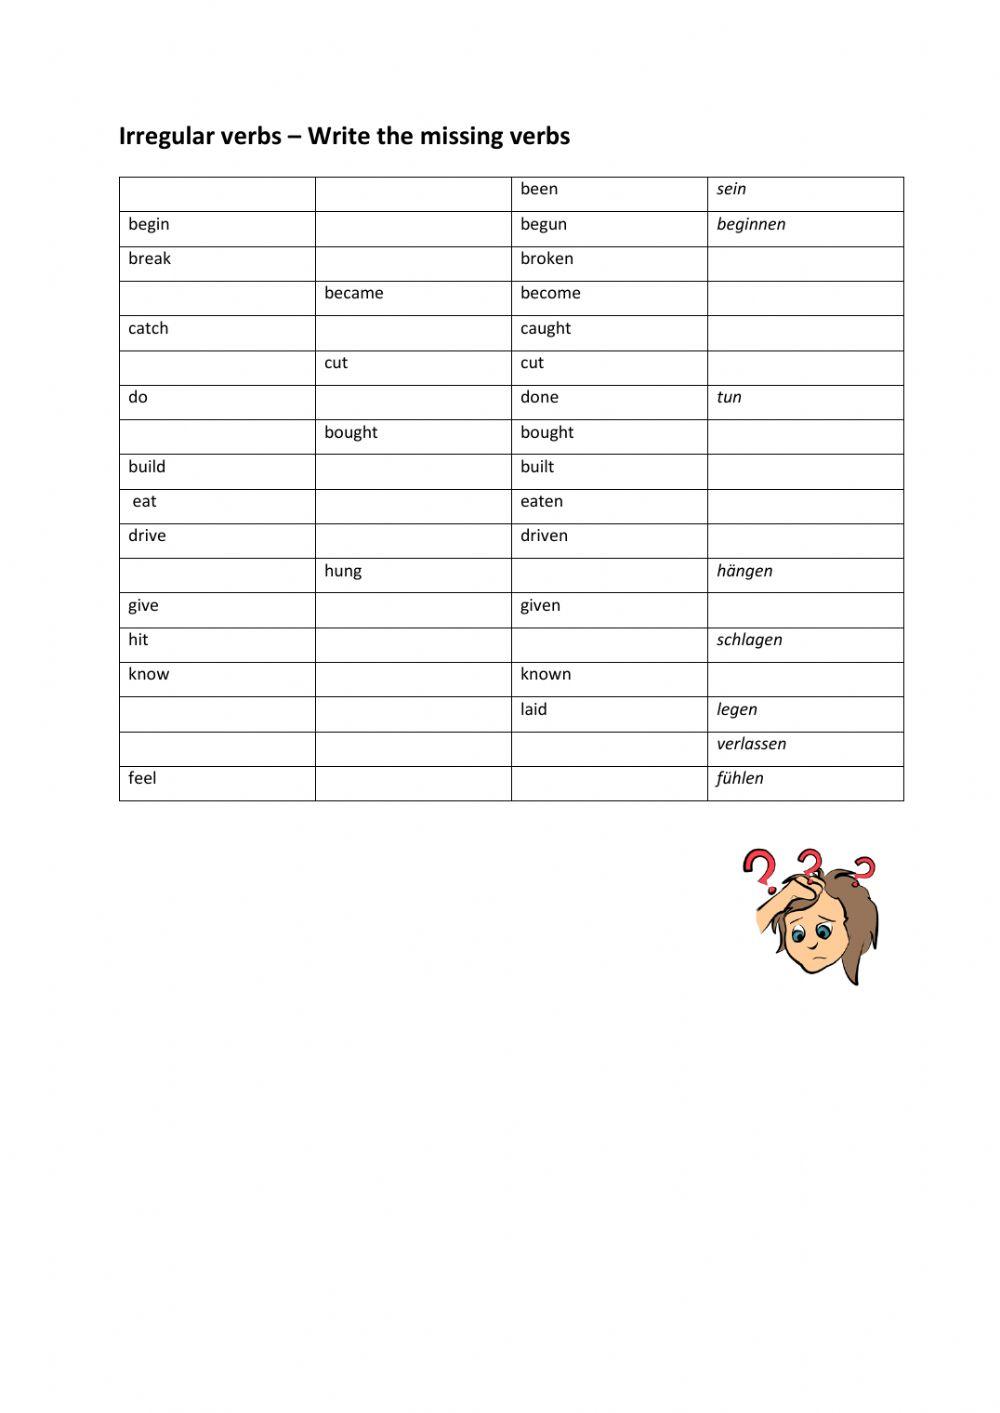 Irregular verbs 1-40 (be-feel)